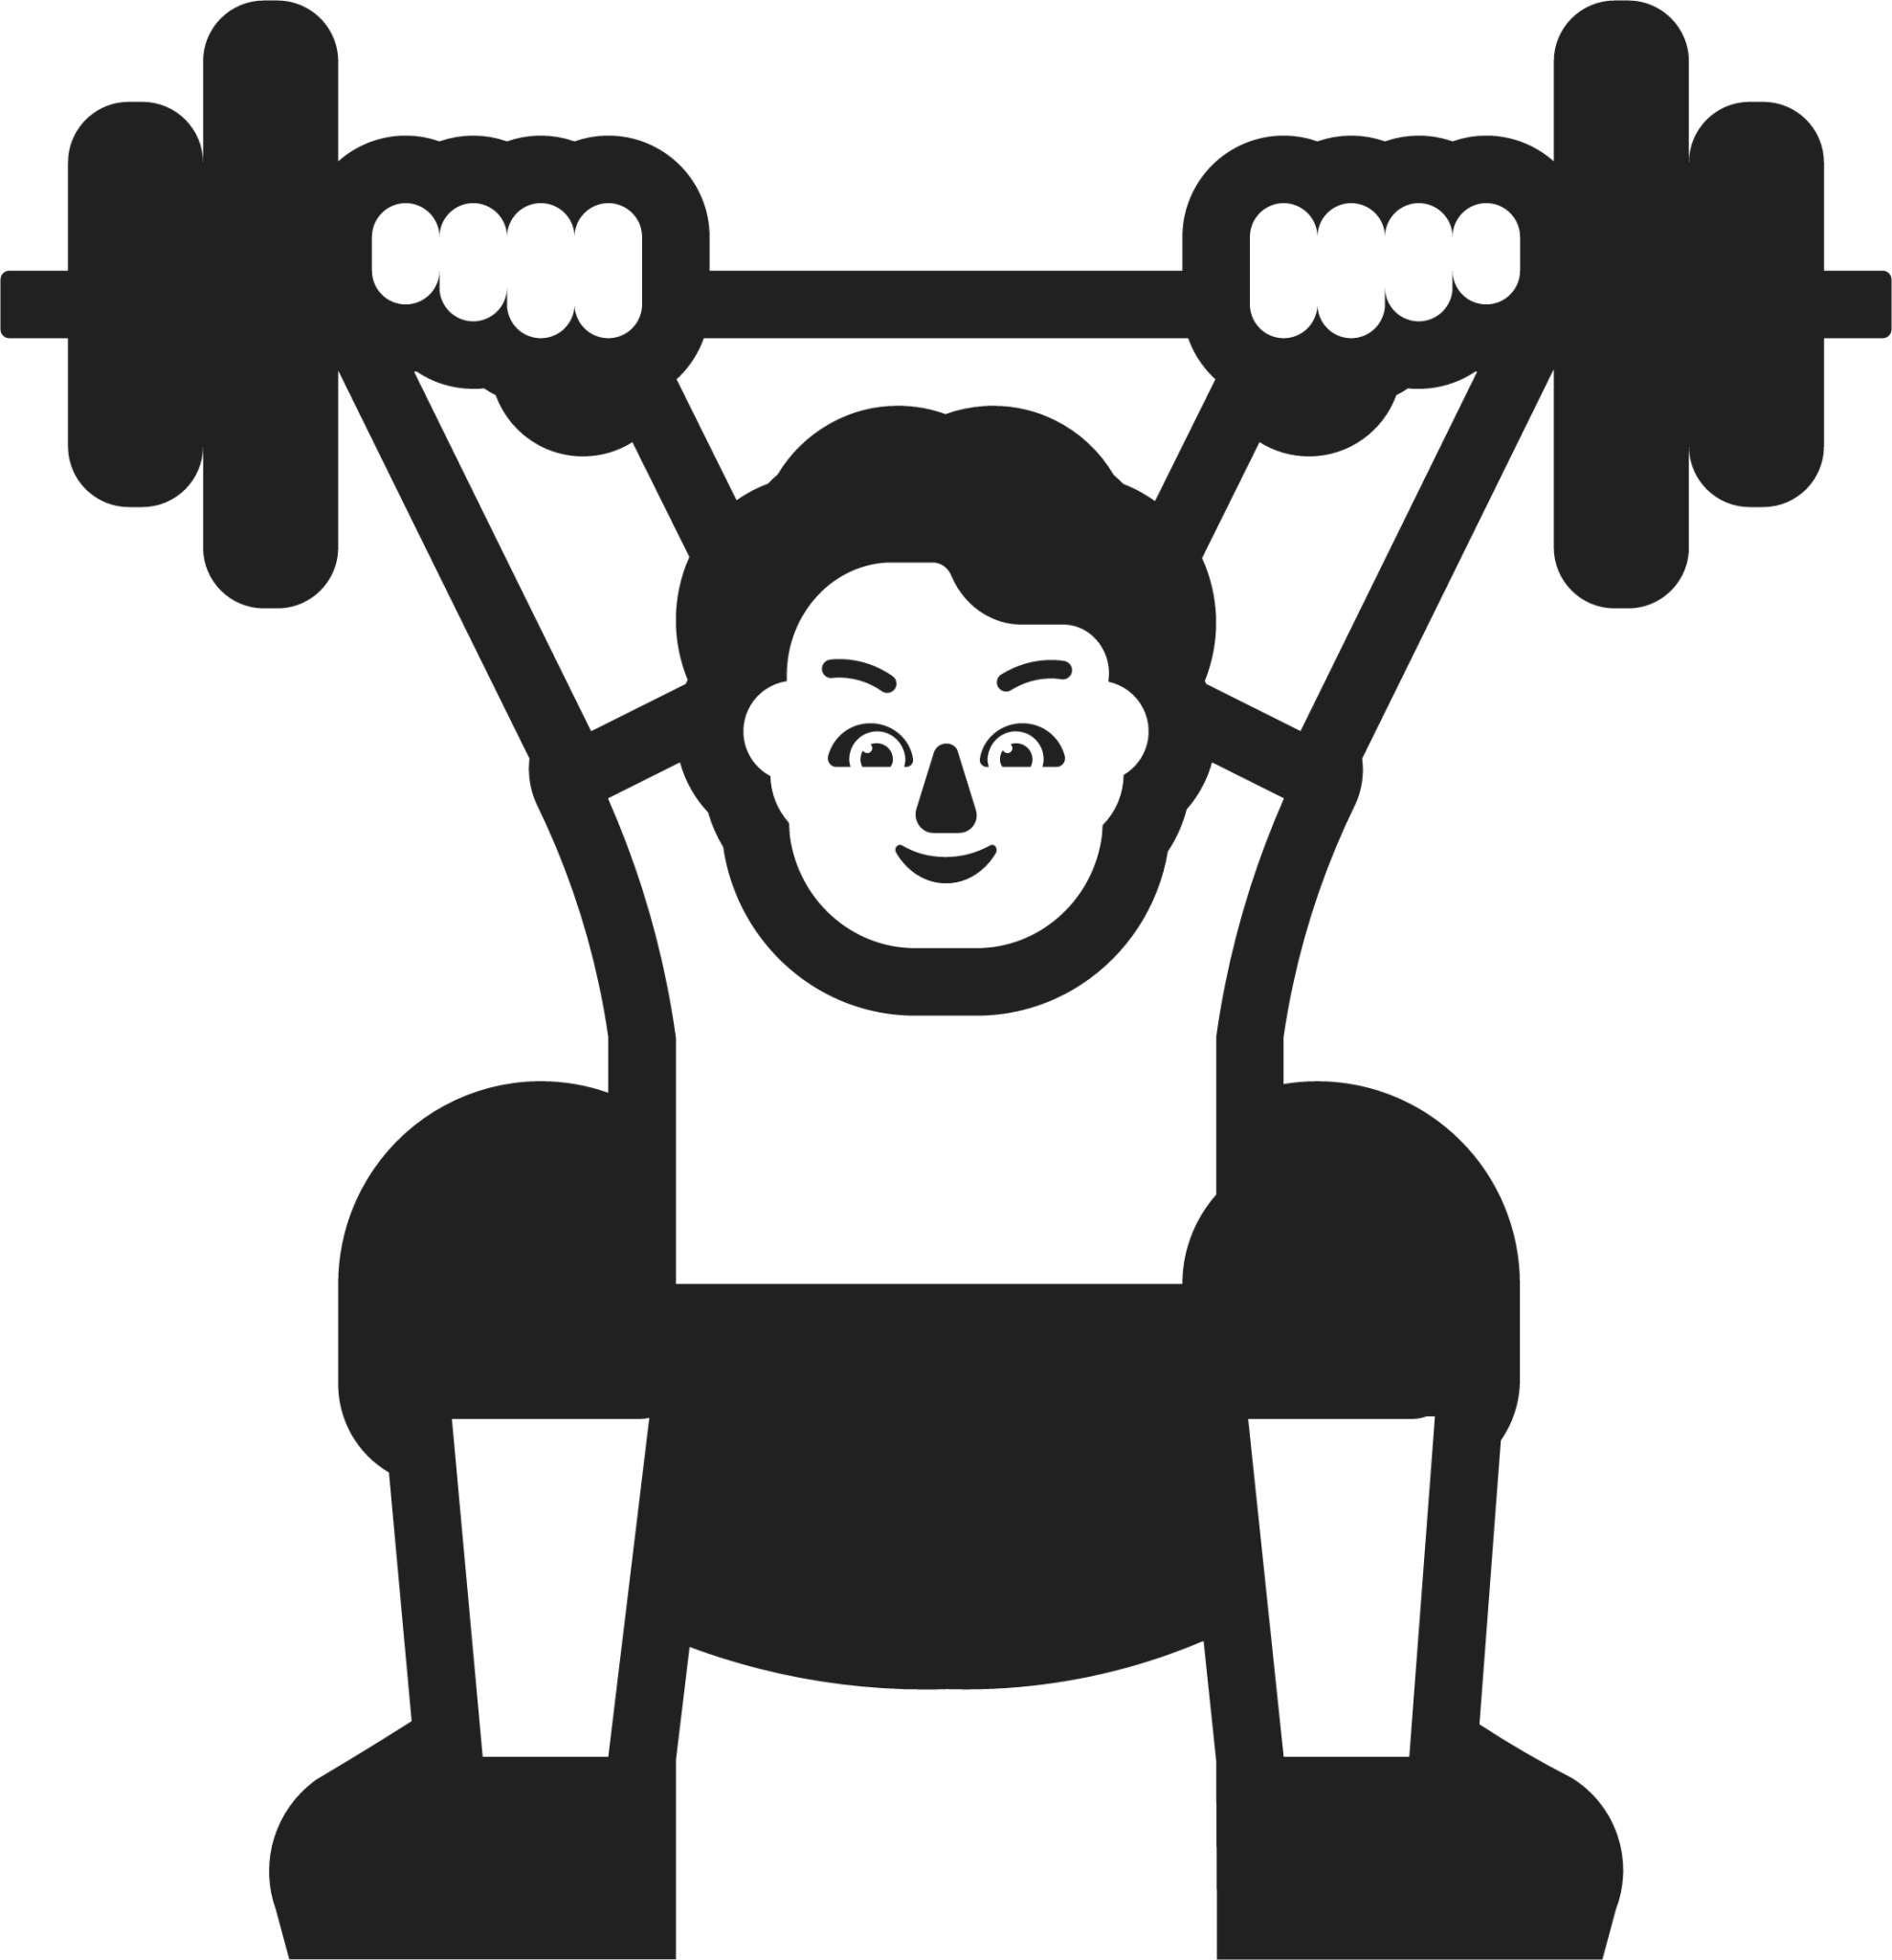 person lifting weights emoji